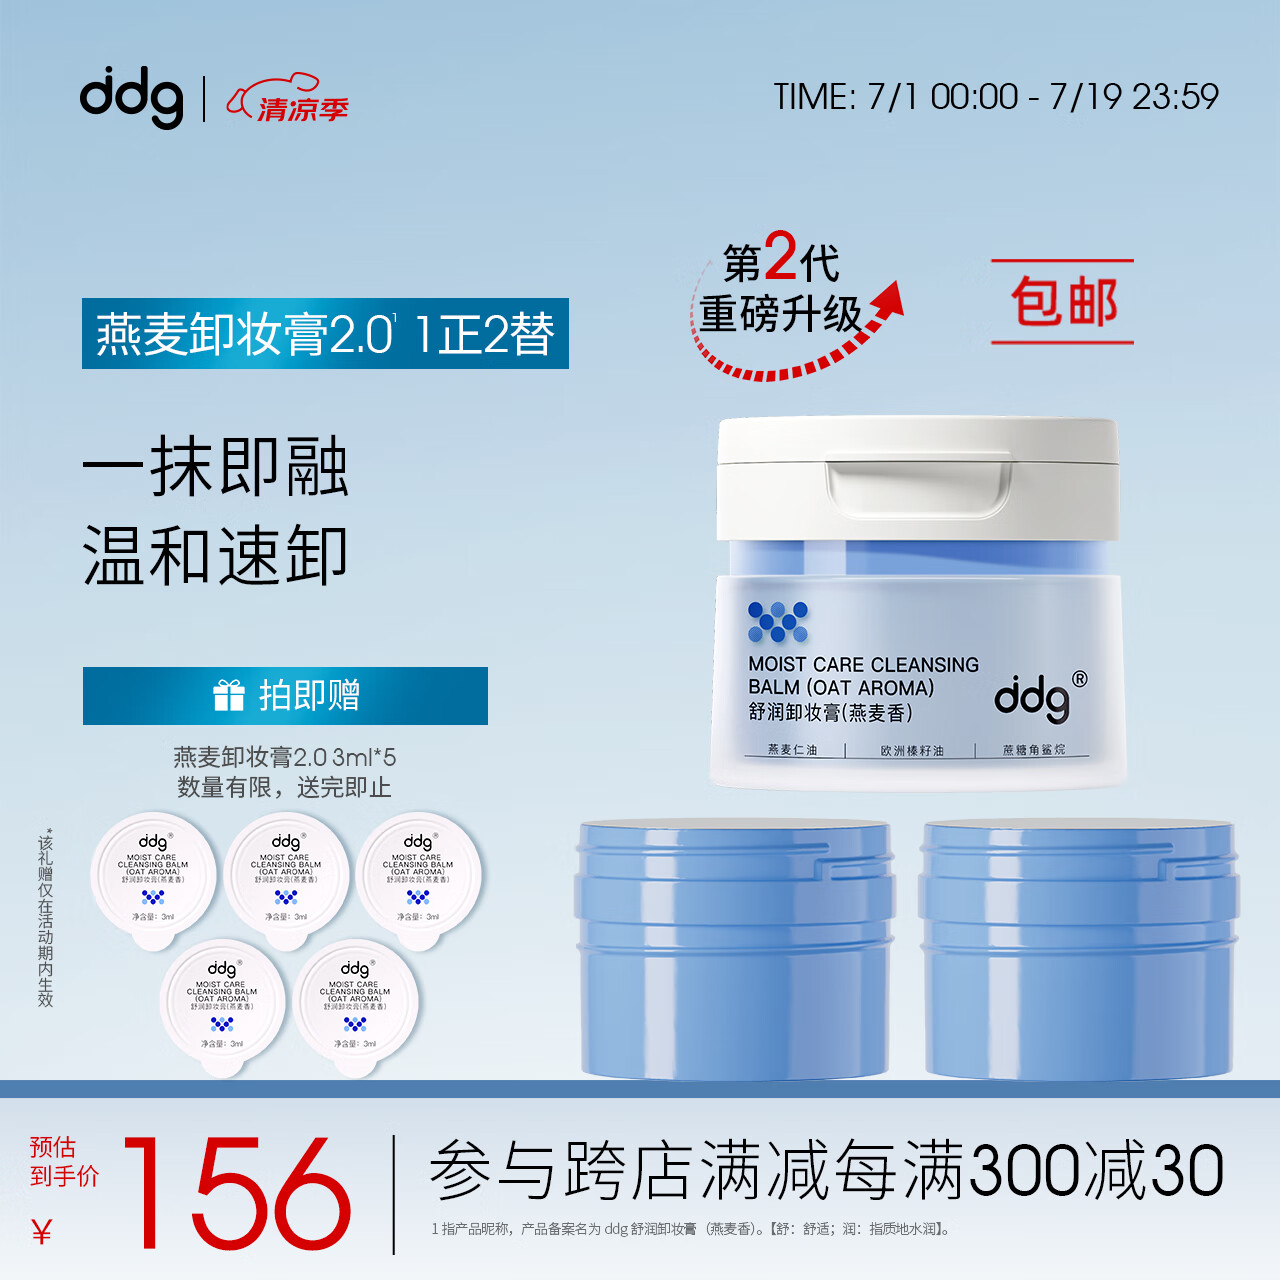 ddg燕麦卸妆膏2.0眼唇卸妆温和敏感肌易乳化正110ml+替110ml*2